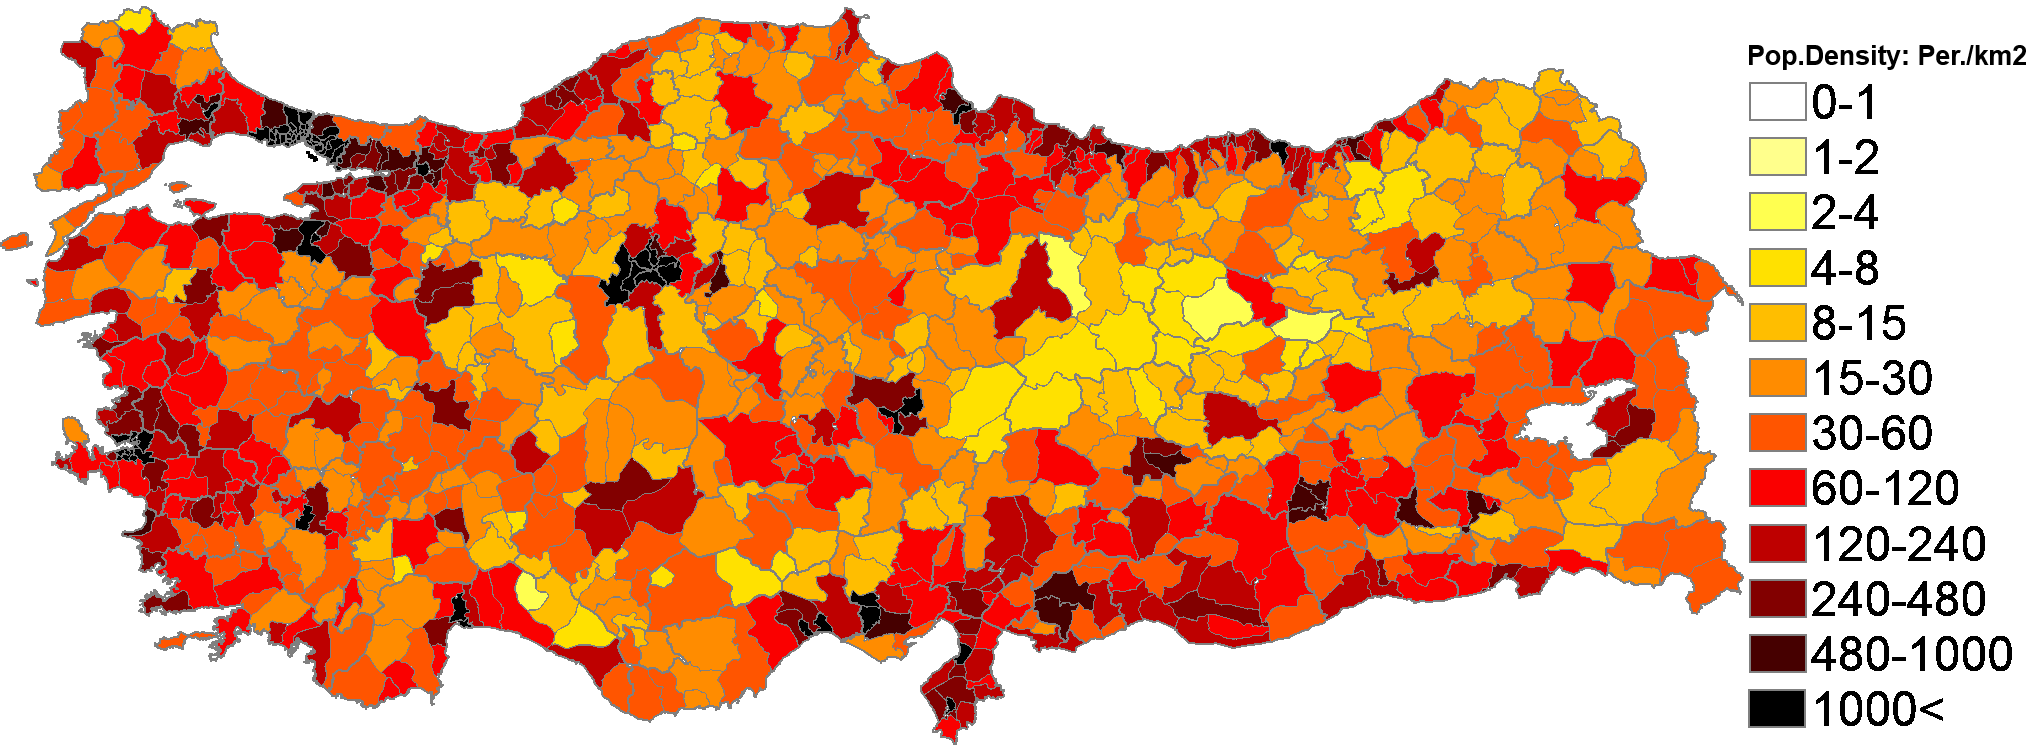 Turkey Population Density Map